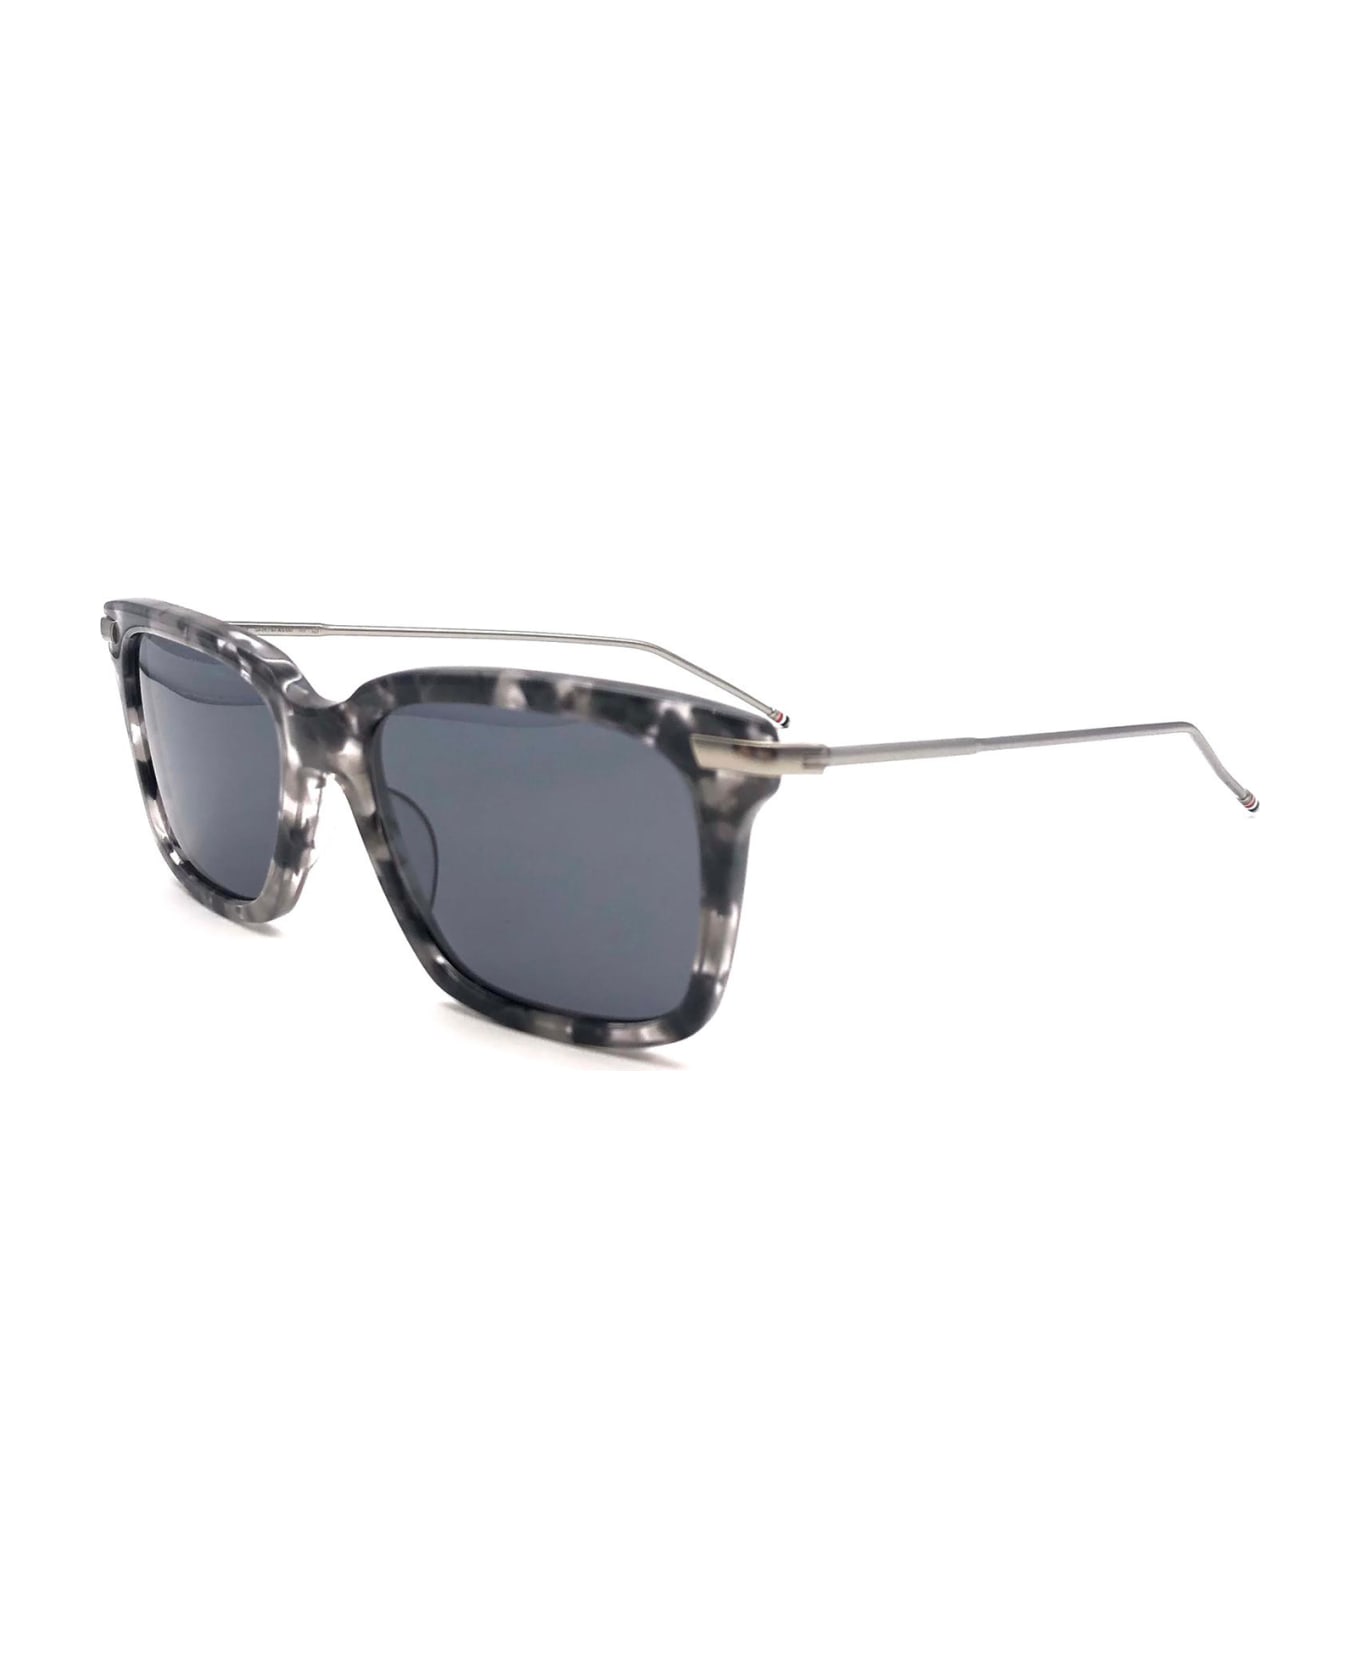 Thom Browne UES701A/G0003 Sunglasses - Dark Grey